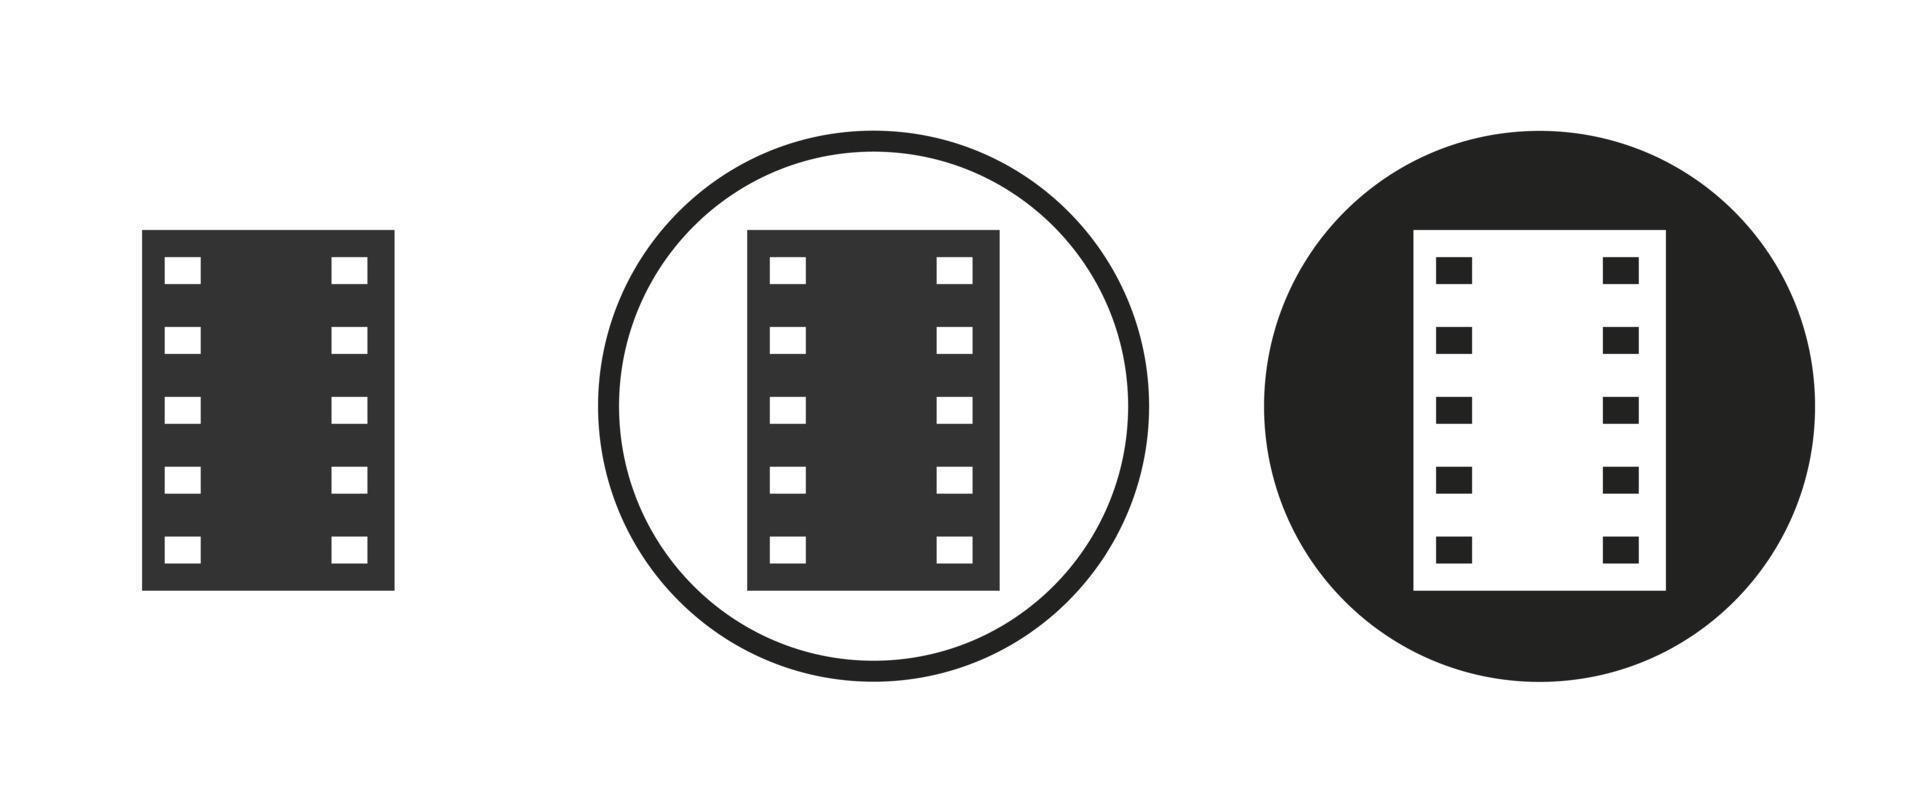 Slide film icon . web icon set .vector illustration vector